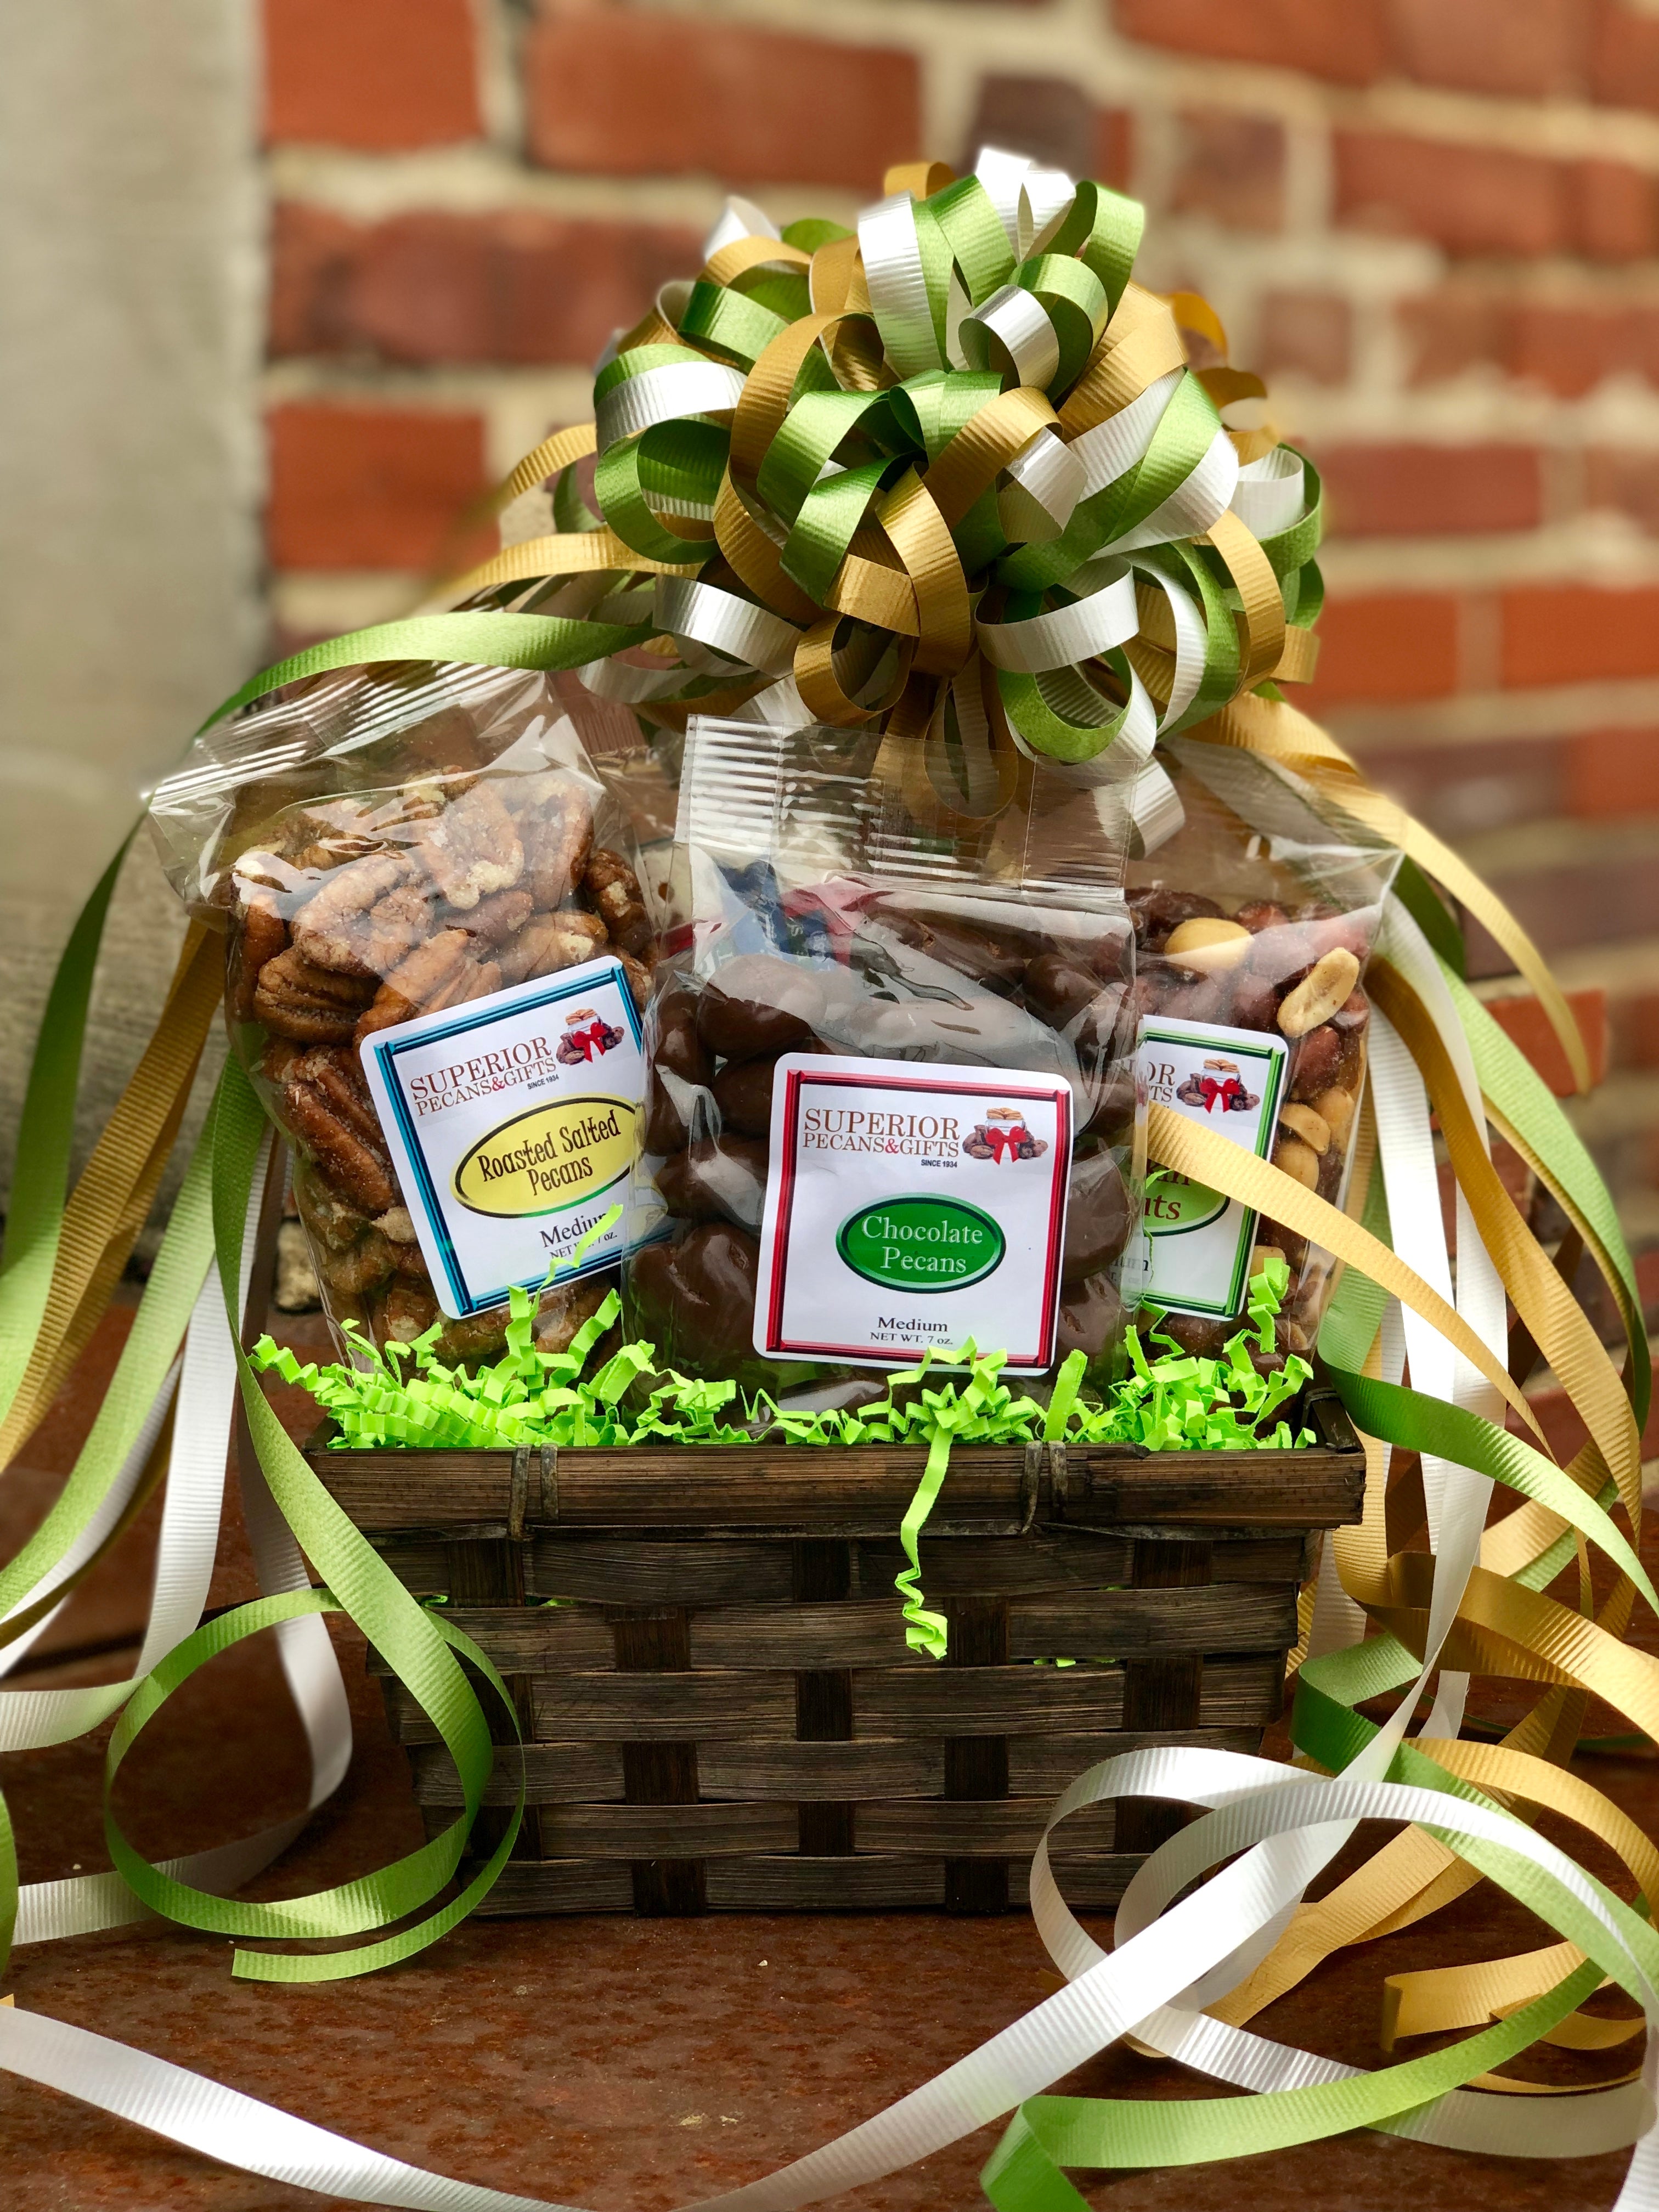 Christmas Gift Baskets for Women Gift Basket Christmas Gift Ideas